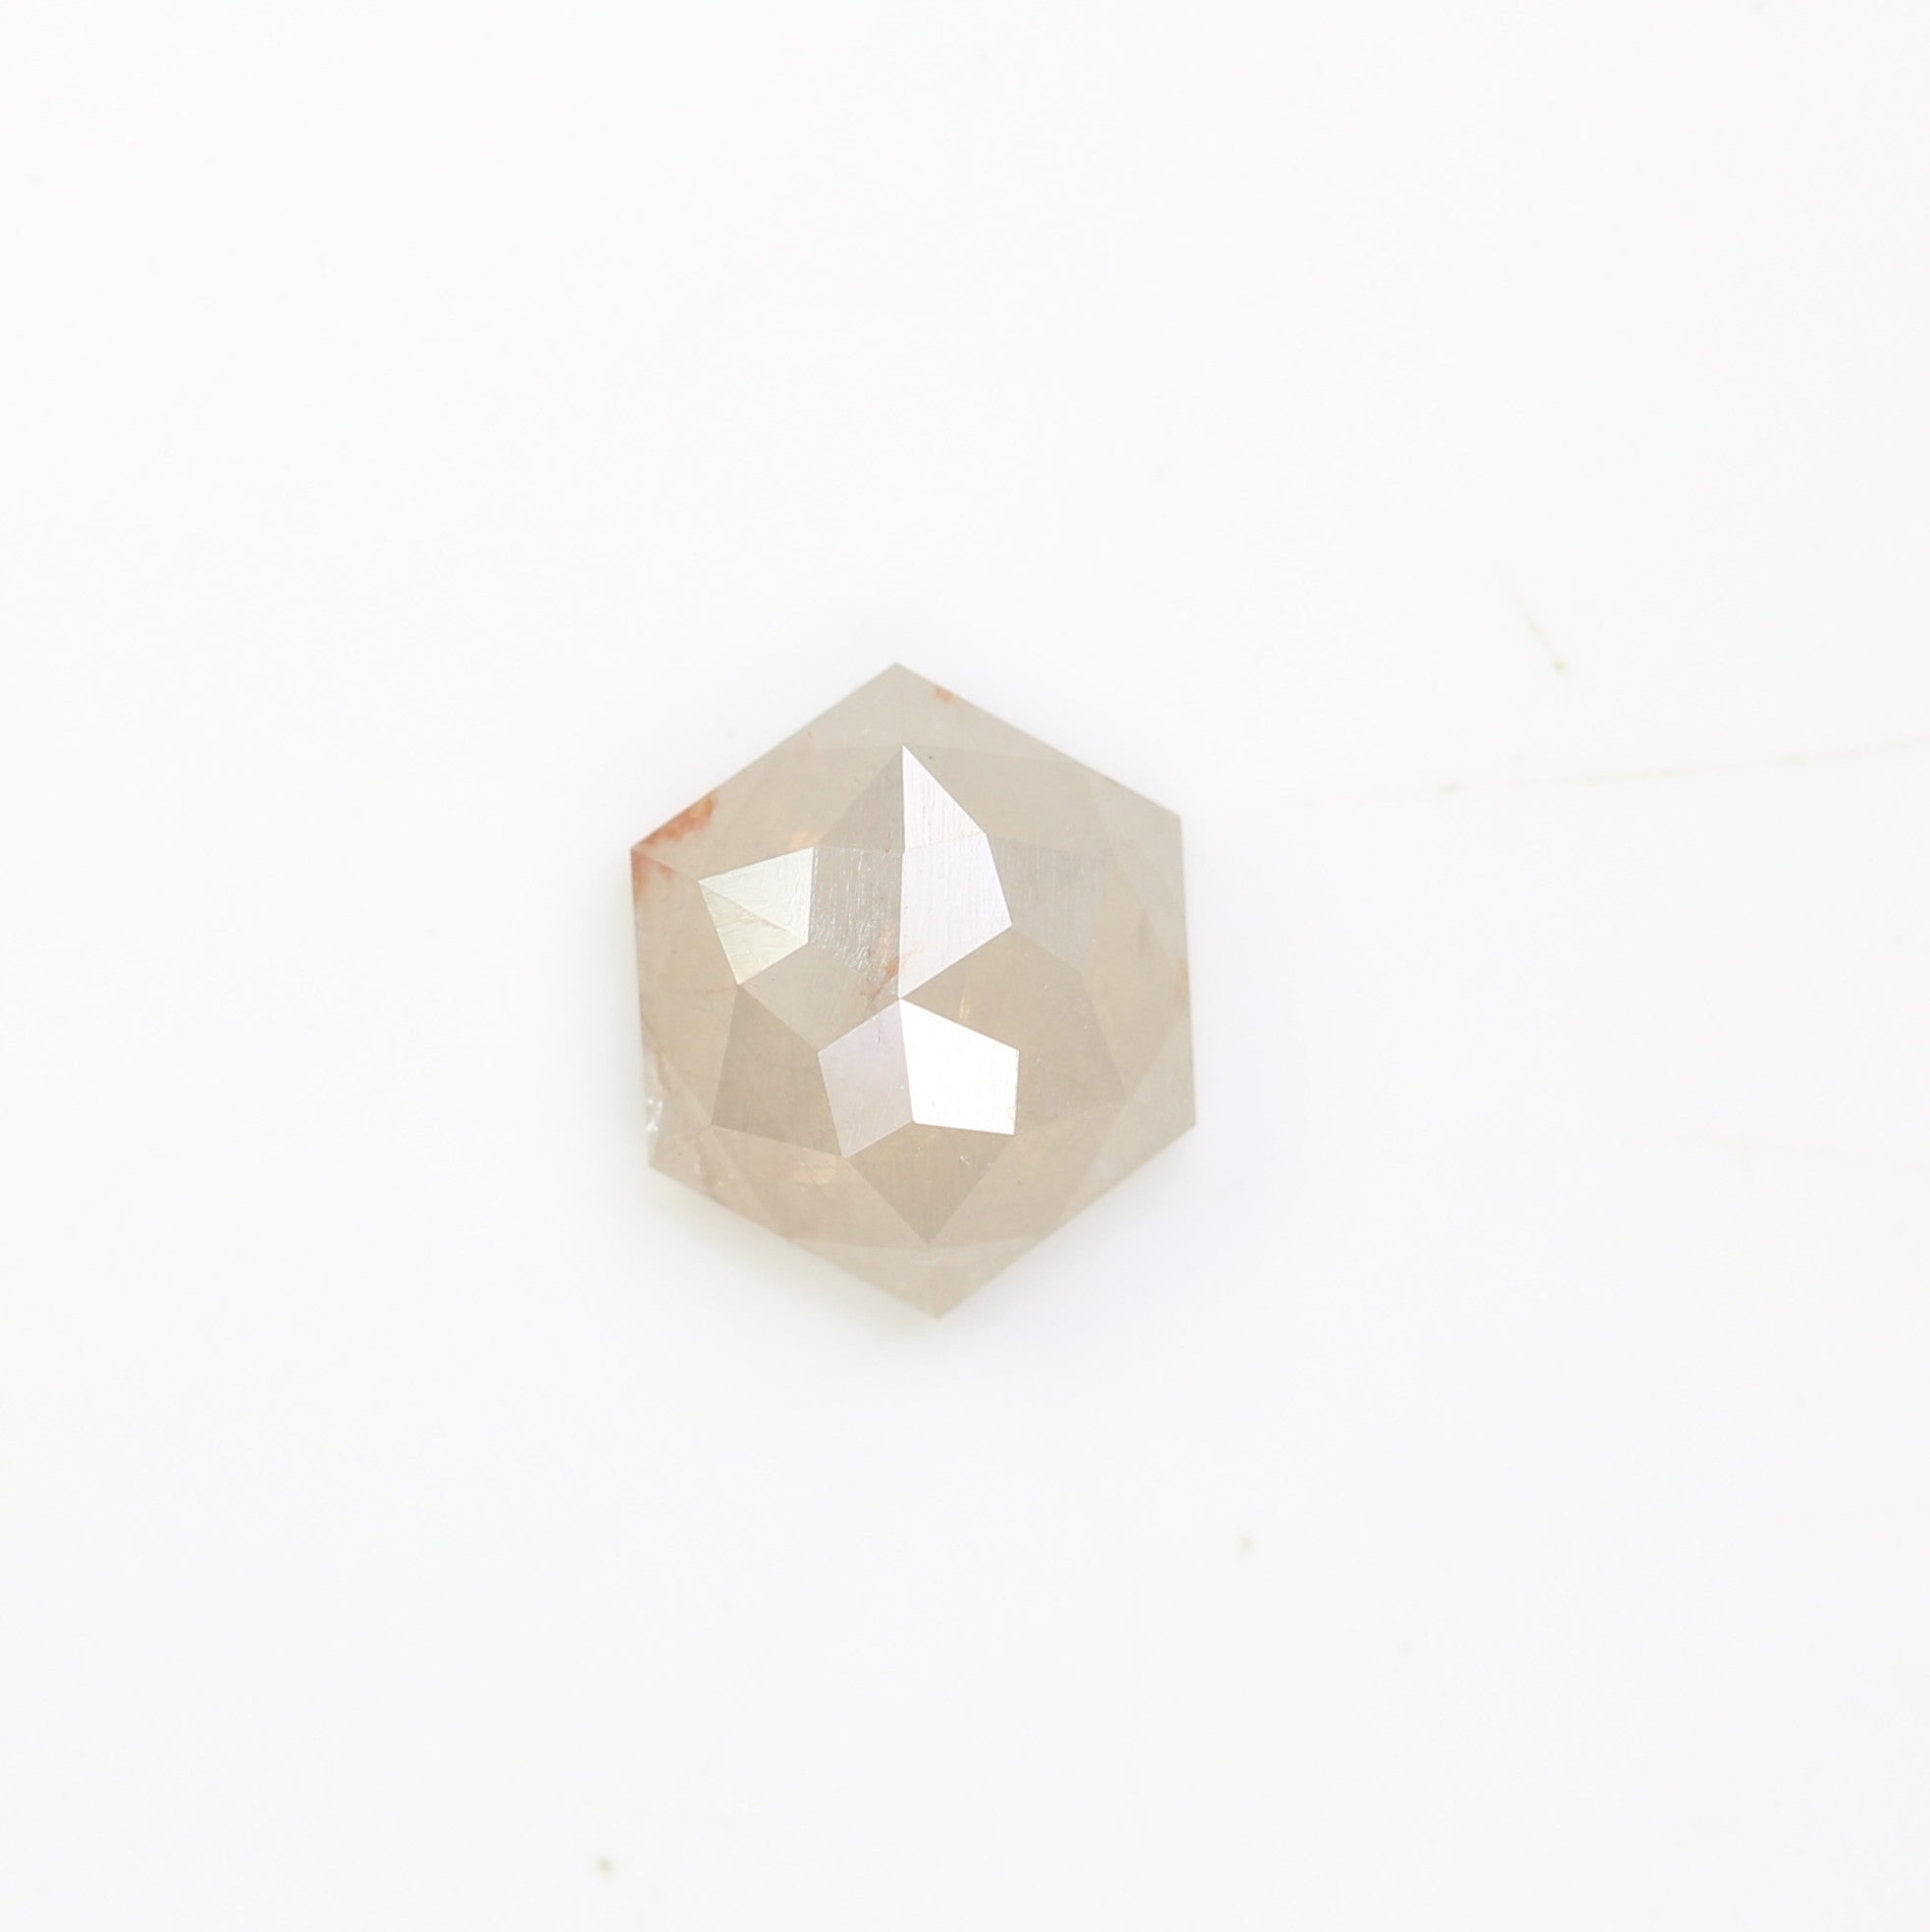 0.82 Carat Natural Grey Loose Hexagon Shape Rustic Diamond For Wedding Ring